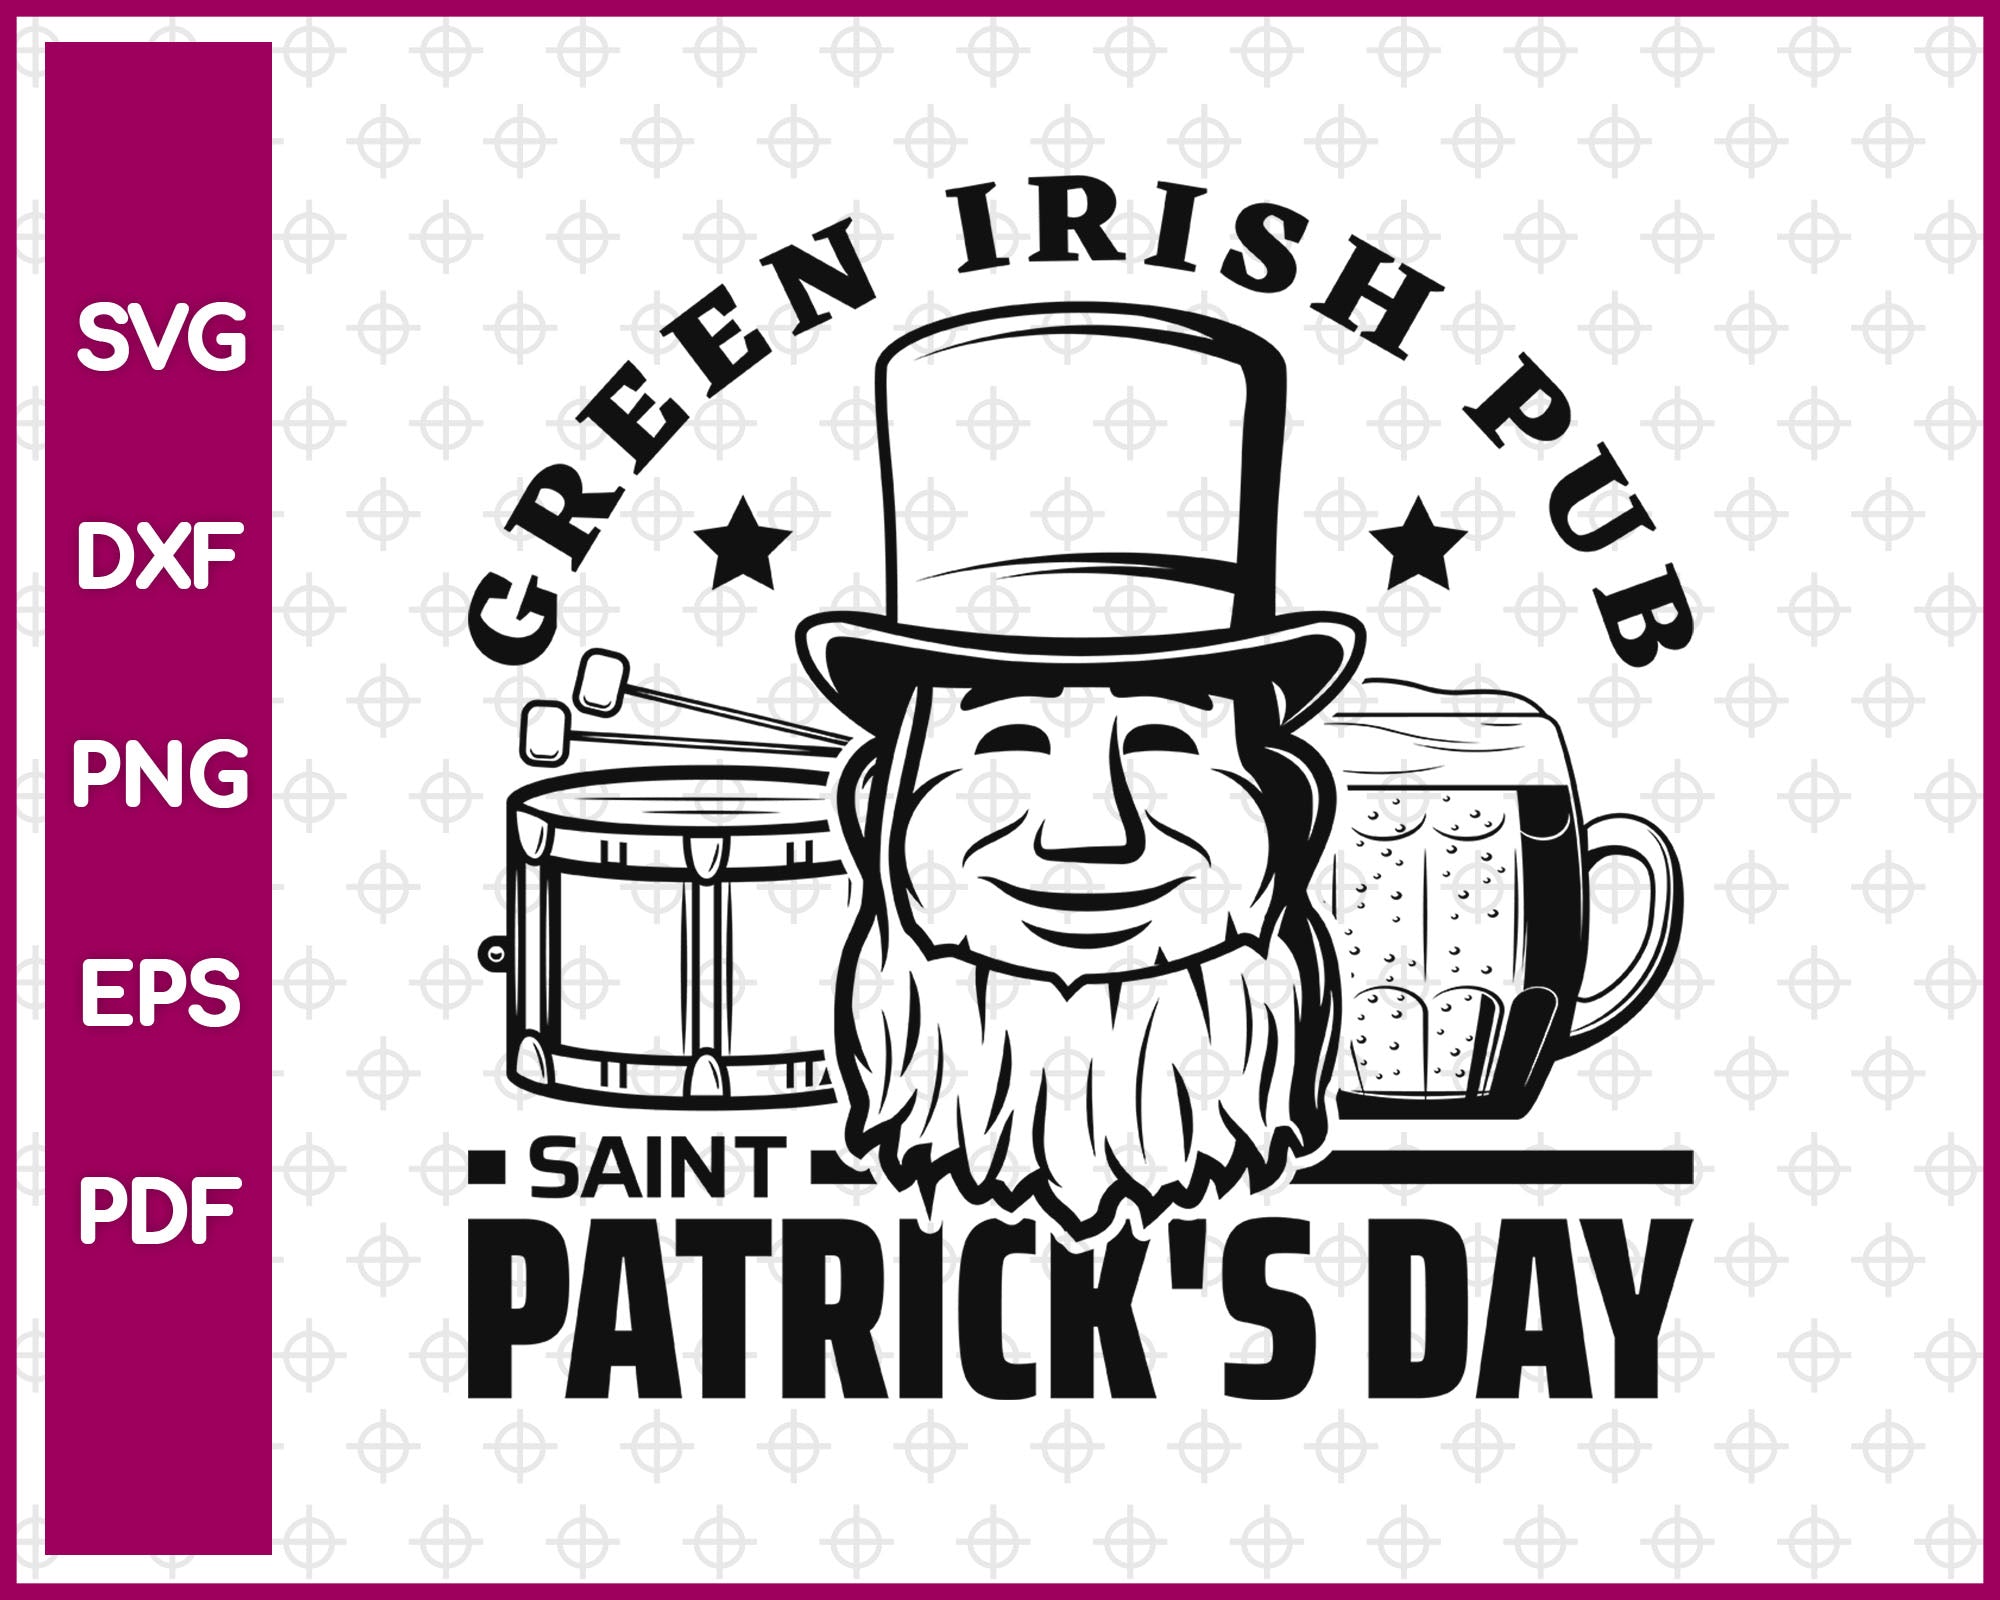 Green Irish Pub Saint Patrick’s Day Svg, St Patricks Day Svg Dxf Png Eps Pdf Printable Files